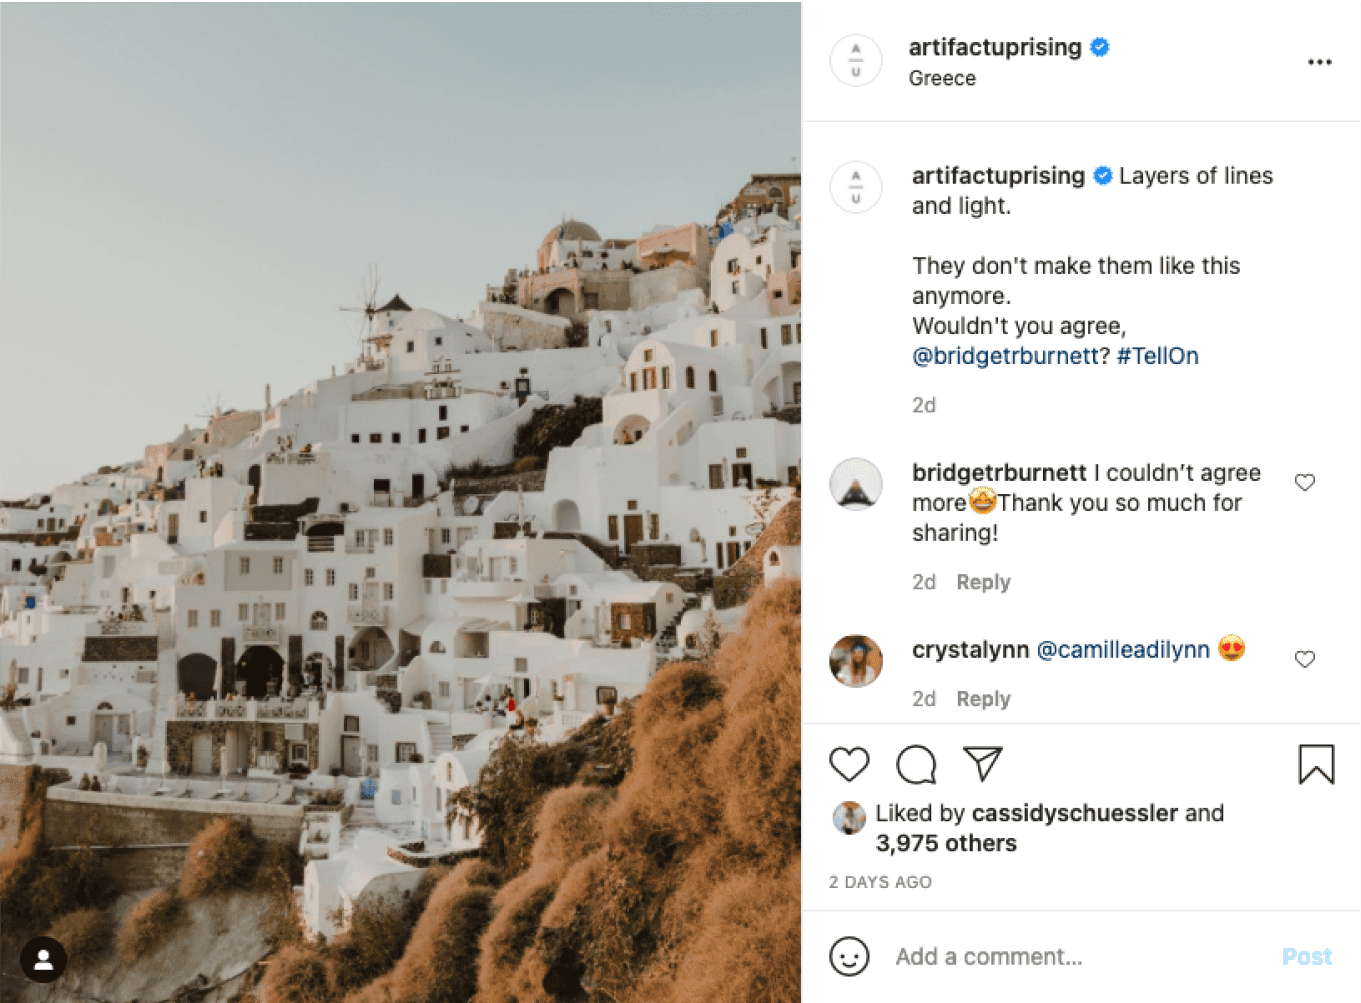 Post from Artifact Uprising's instagram of a mediterranean neighbourhood on a hillside that recieved a lot of engagement